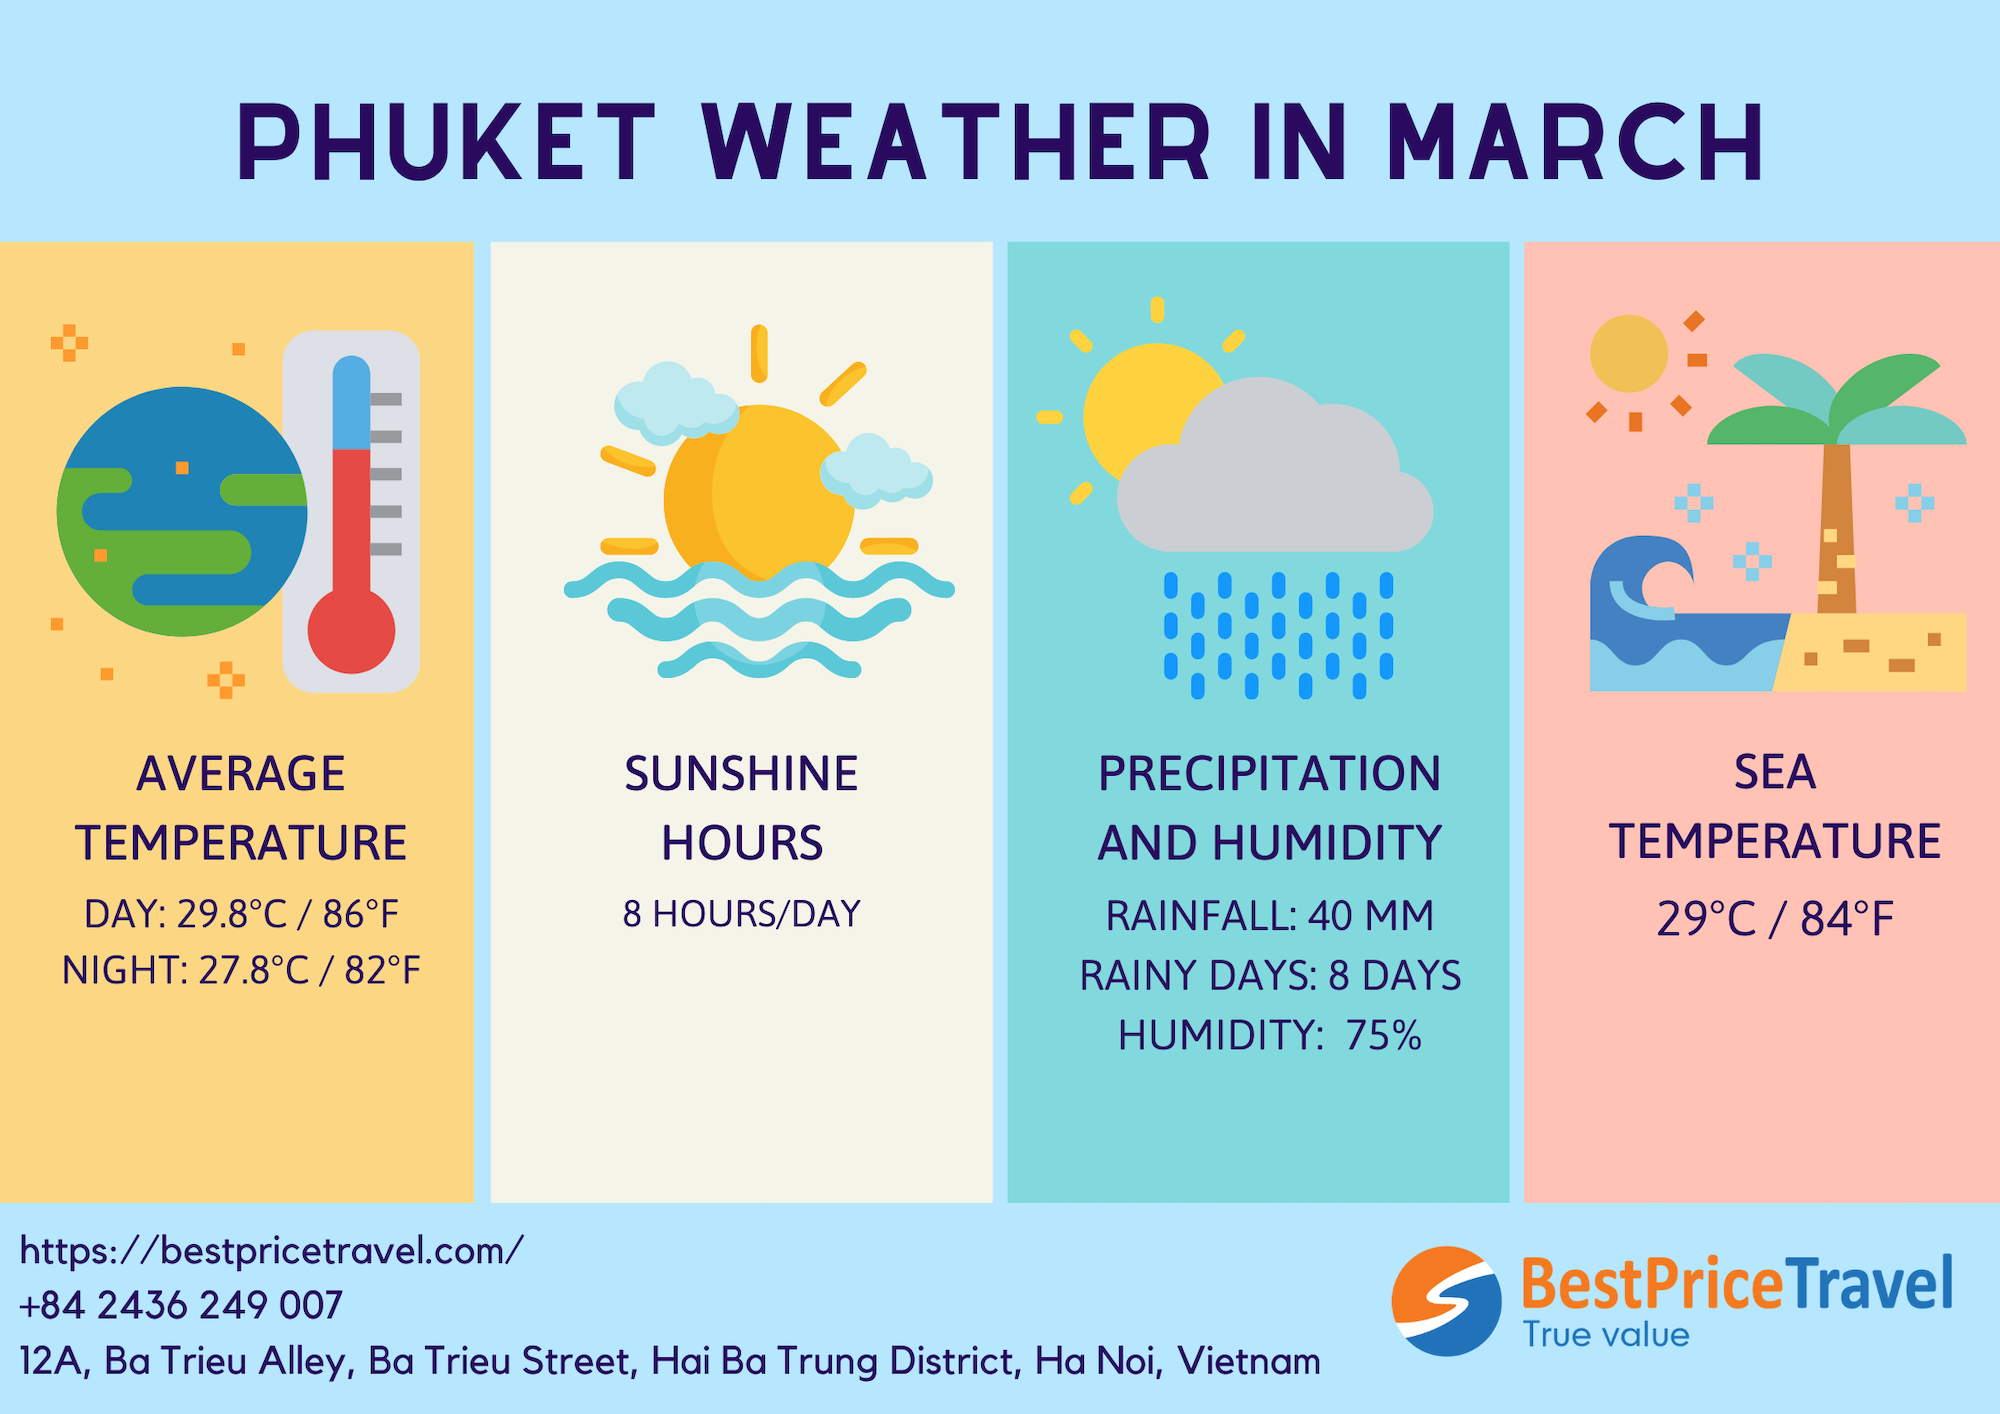 Phuket weather in January 